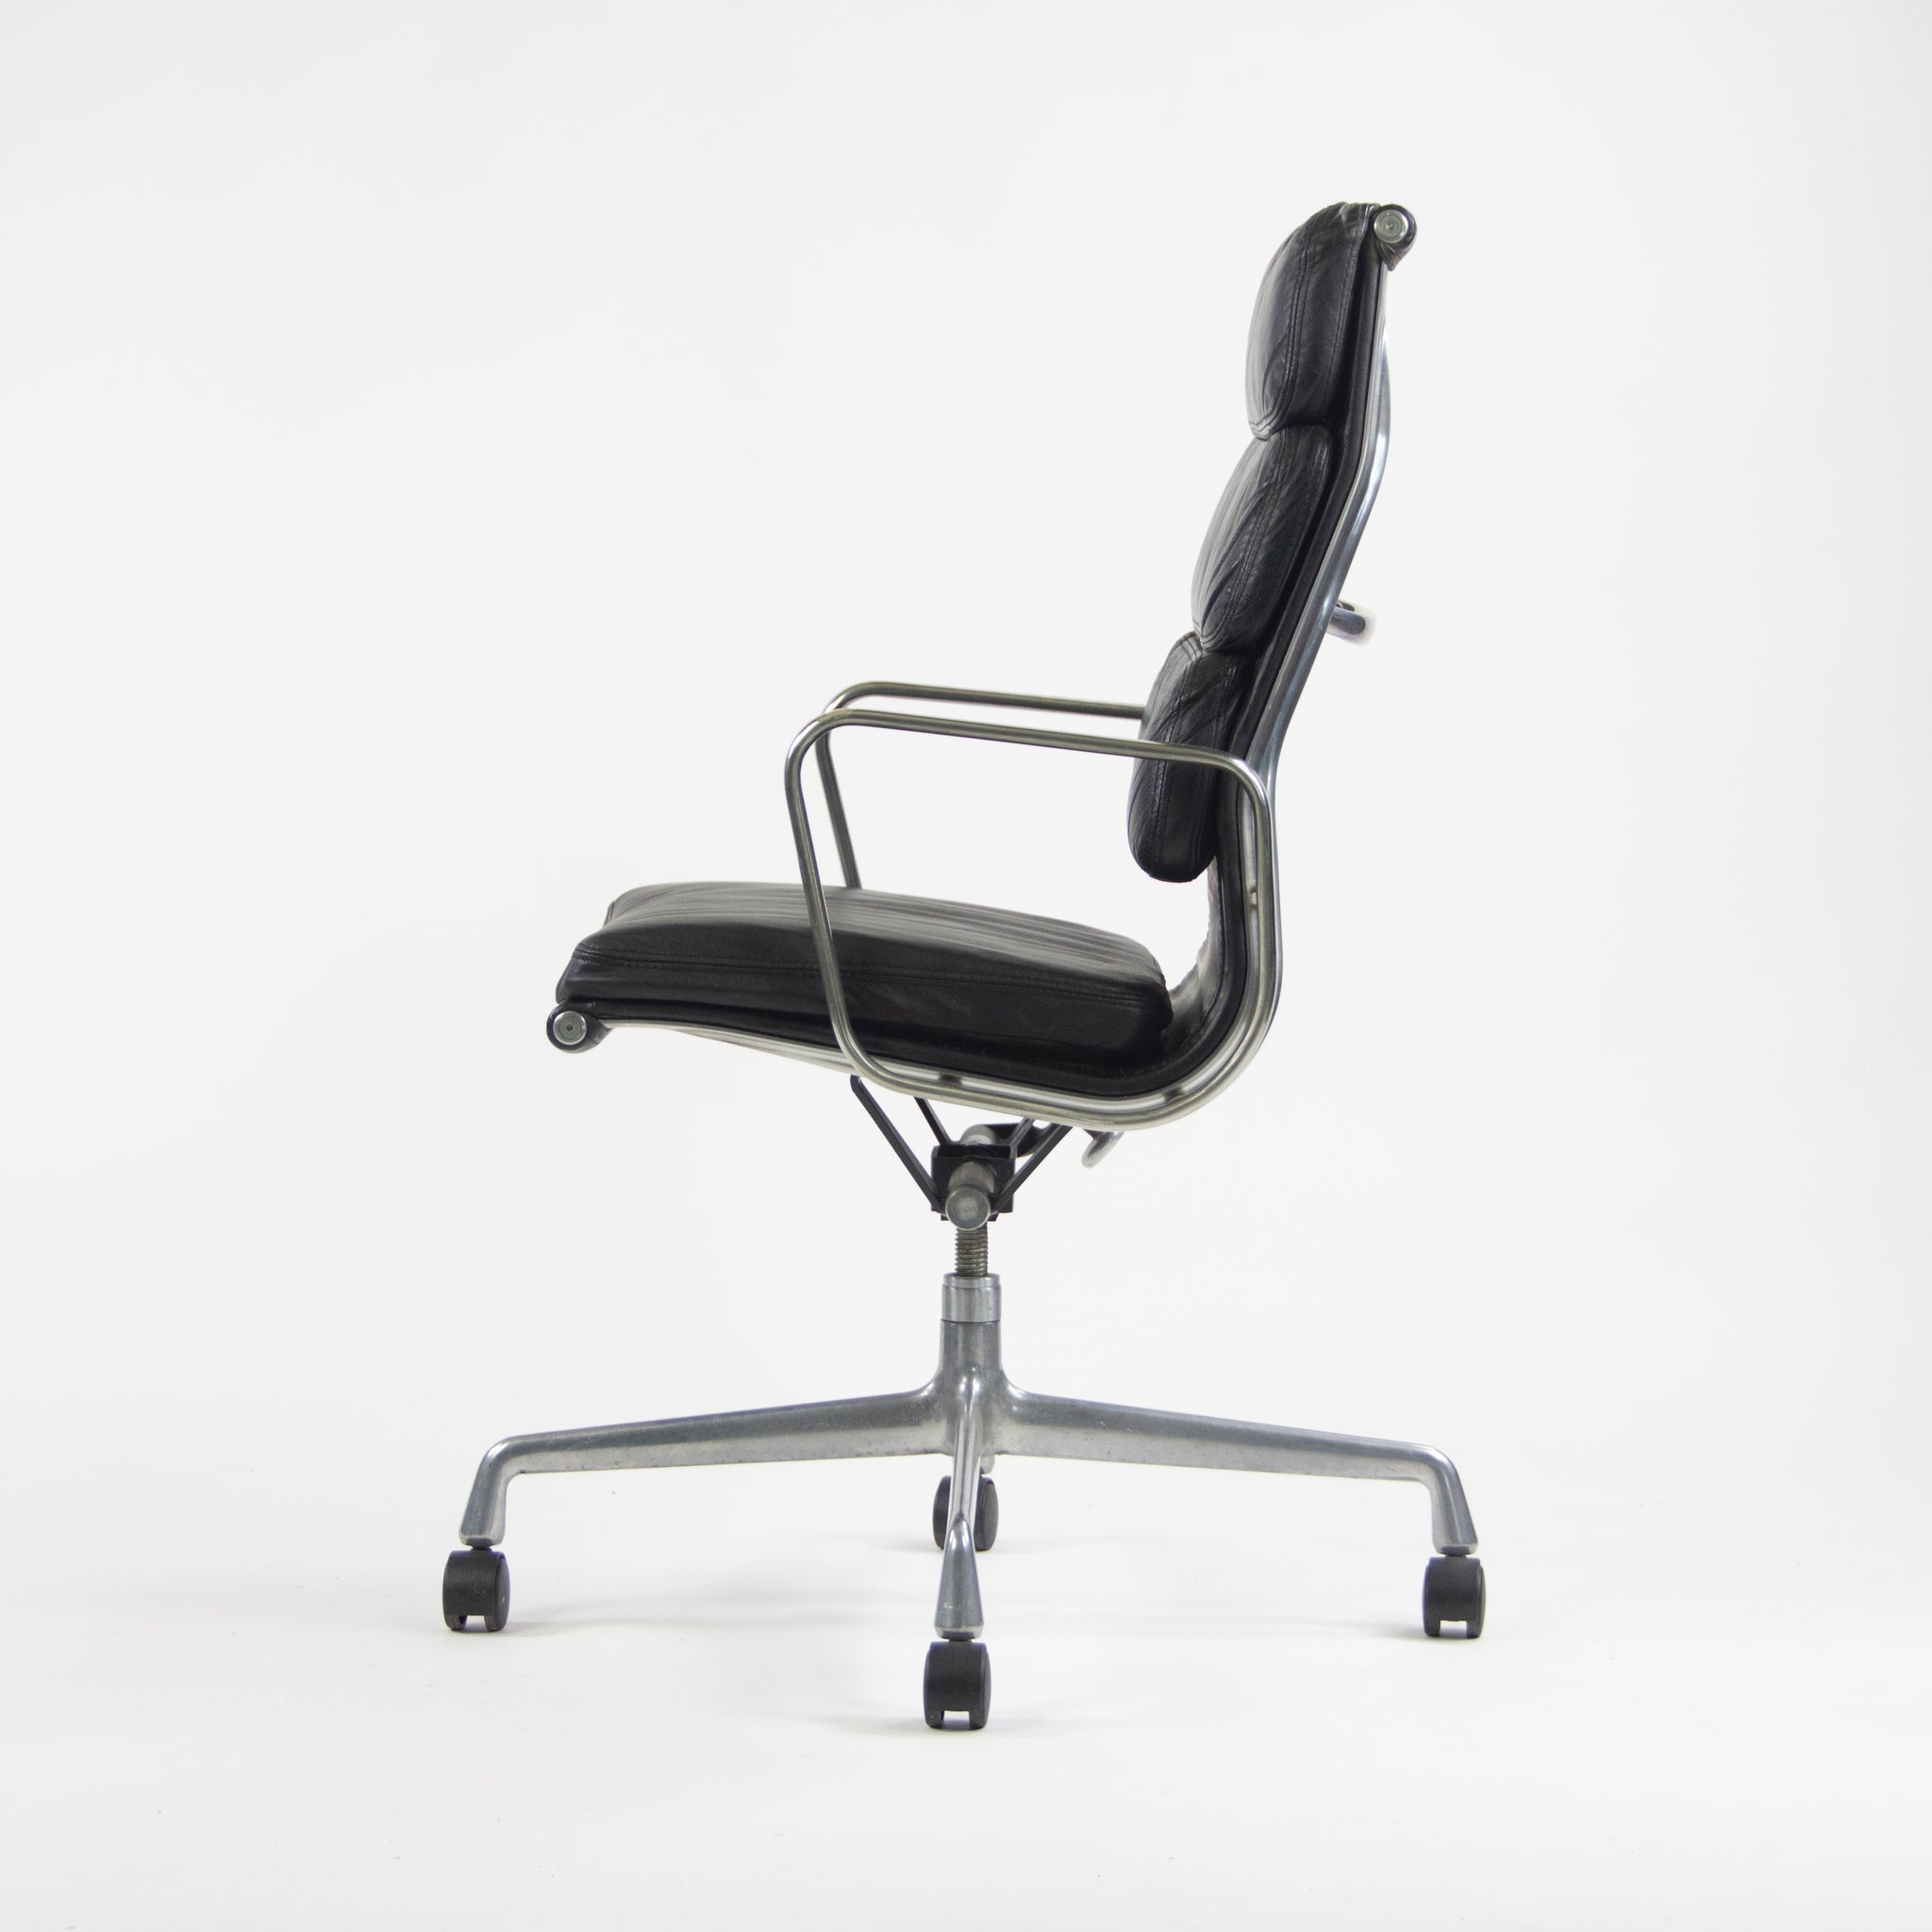 SOLD 1970's Herman Miller Eames Vintage Black High Back Soft Pad Aluminum Group Chair